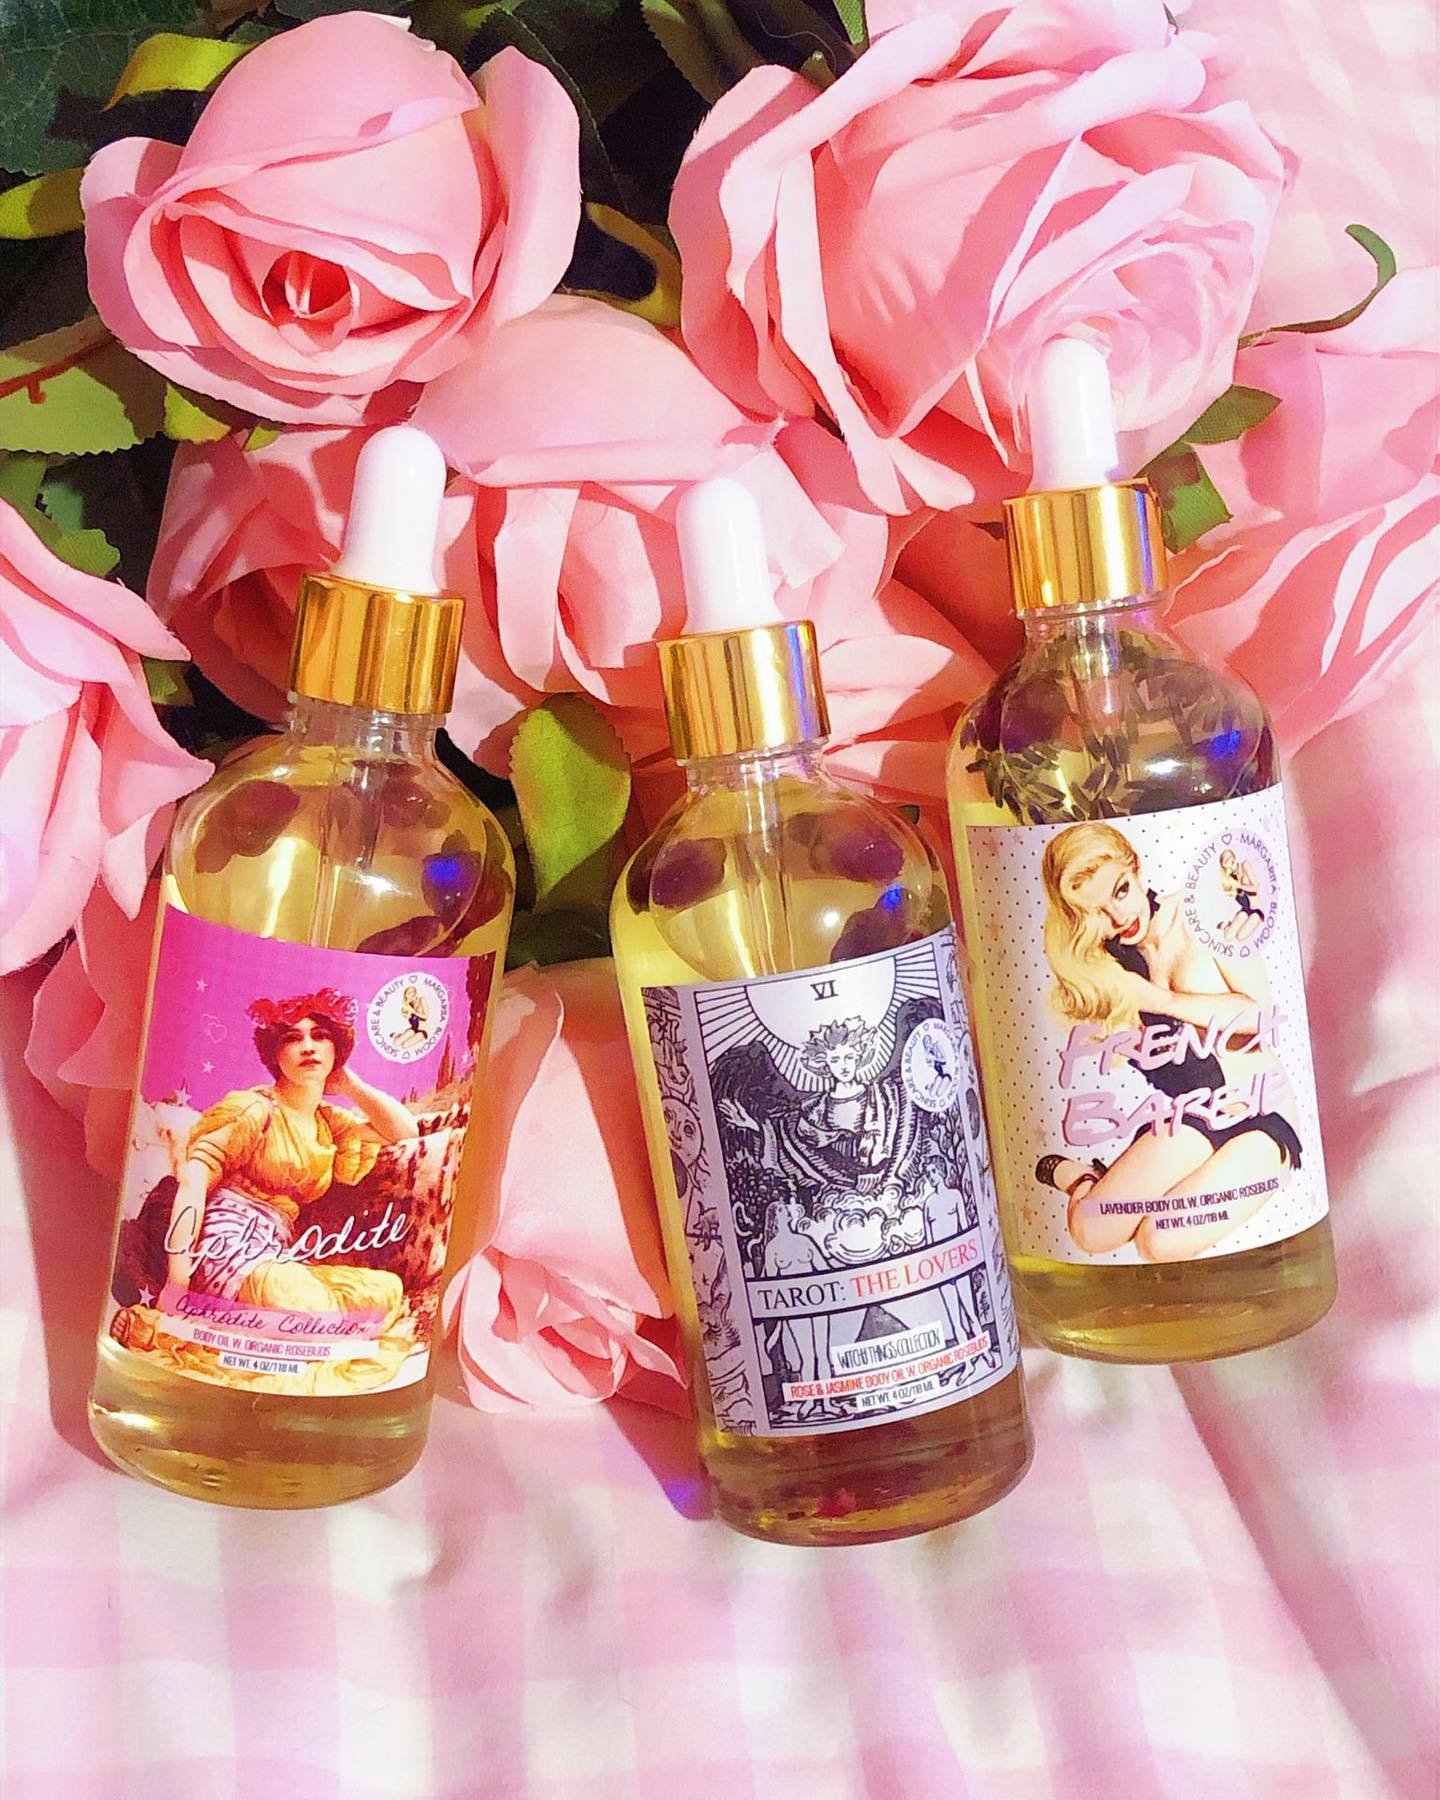 ˚˖𓍢ִ໋🌷͙֒✧˚.🎀༘⋆ Pretty beauty potions I have in my shop!! ˚˖𓍢ִ໋🌷͙֒✧˚.🎀༘⋆ What&rsquo;s your favorite?
.
#margaritabloom #beauty #skincare #bodycare #bodyoils #soap #perfume #perfumemist #parfume #beautybloggers #twice #whimsicalbeauty #bathcare #